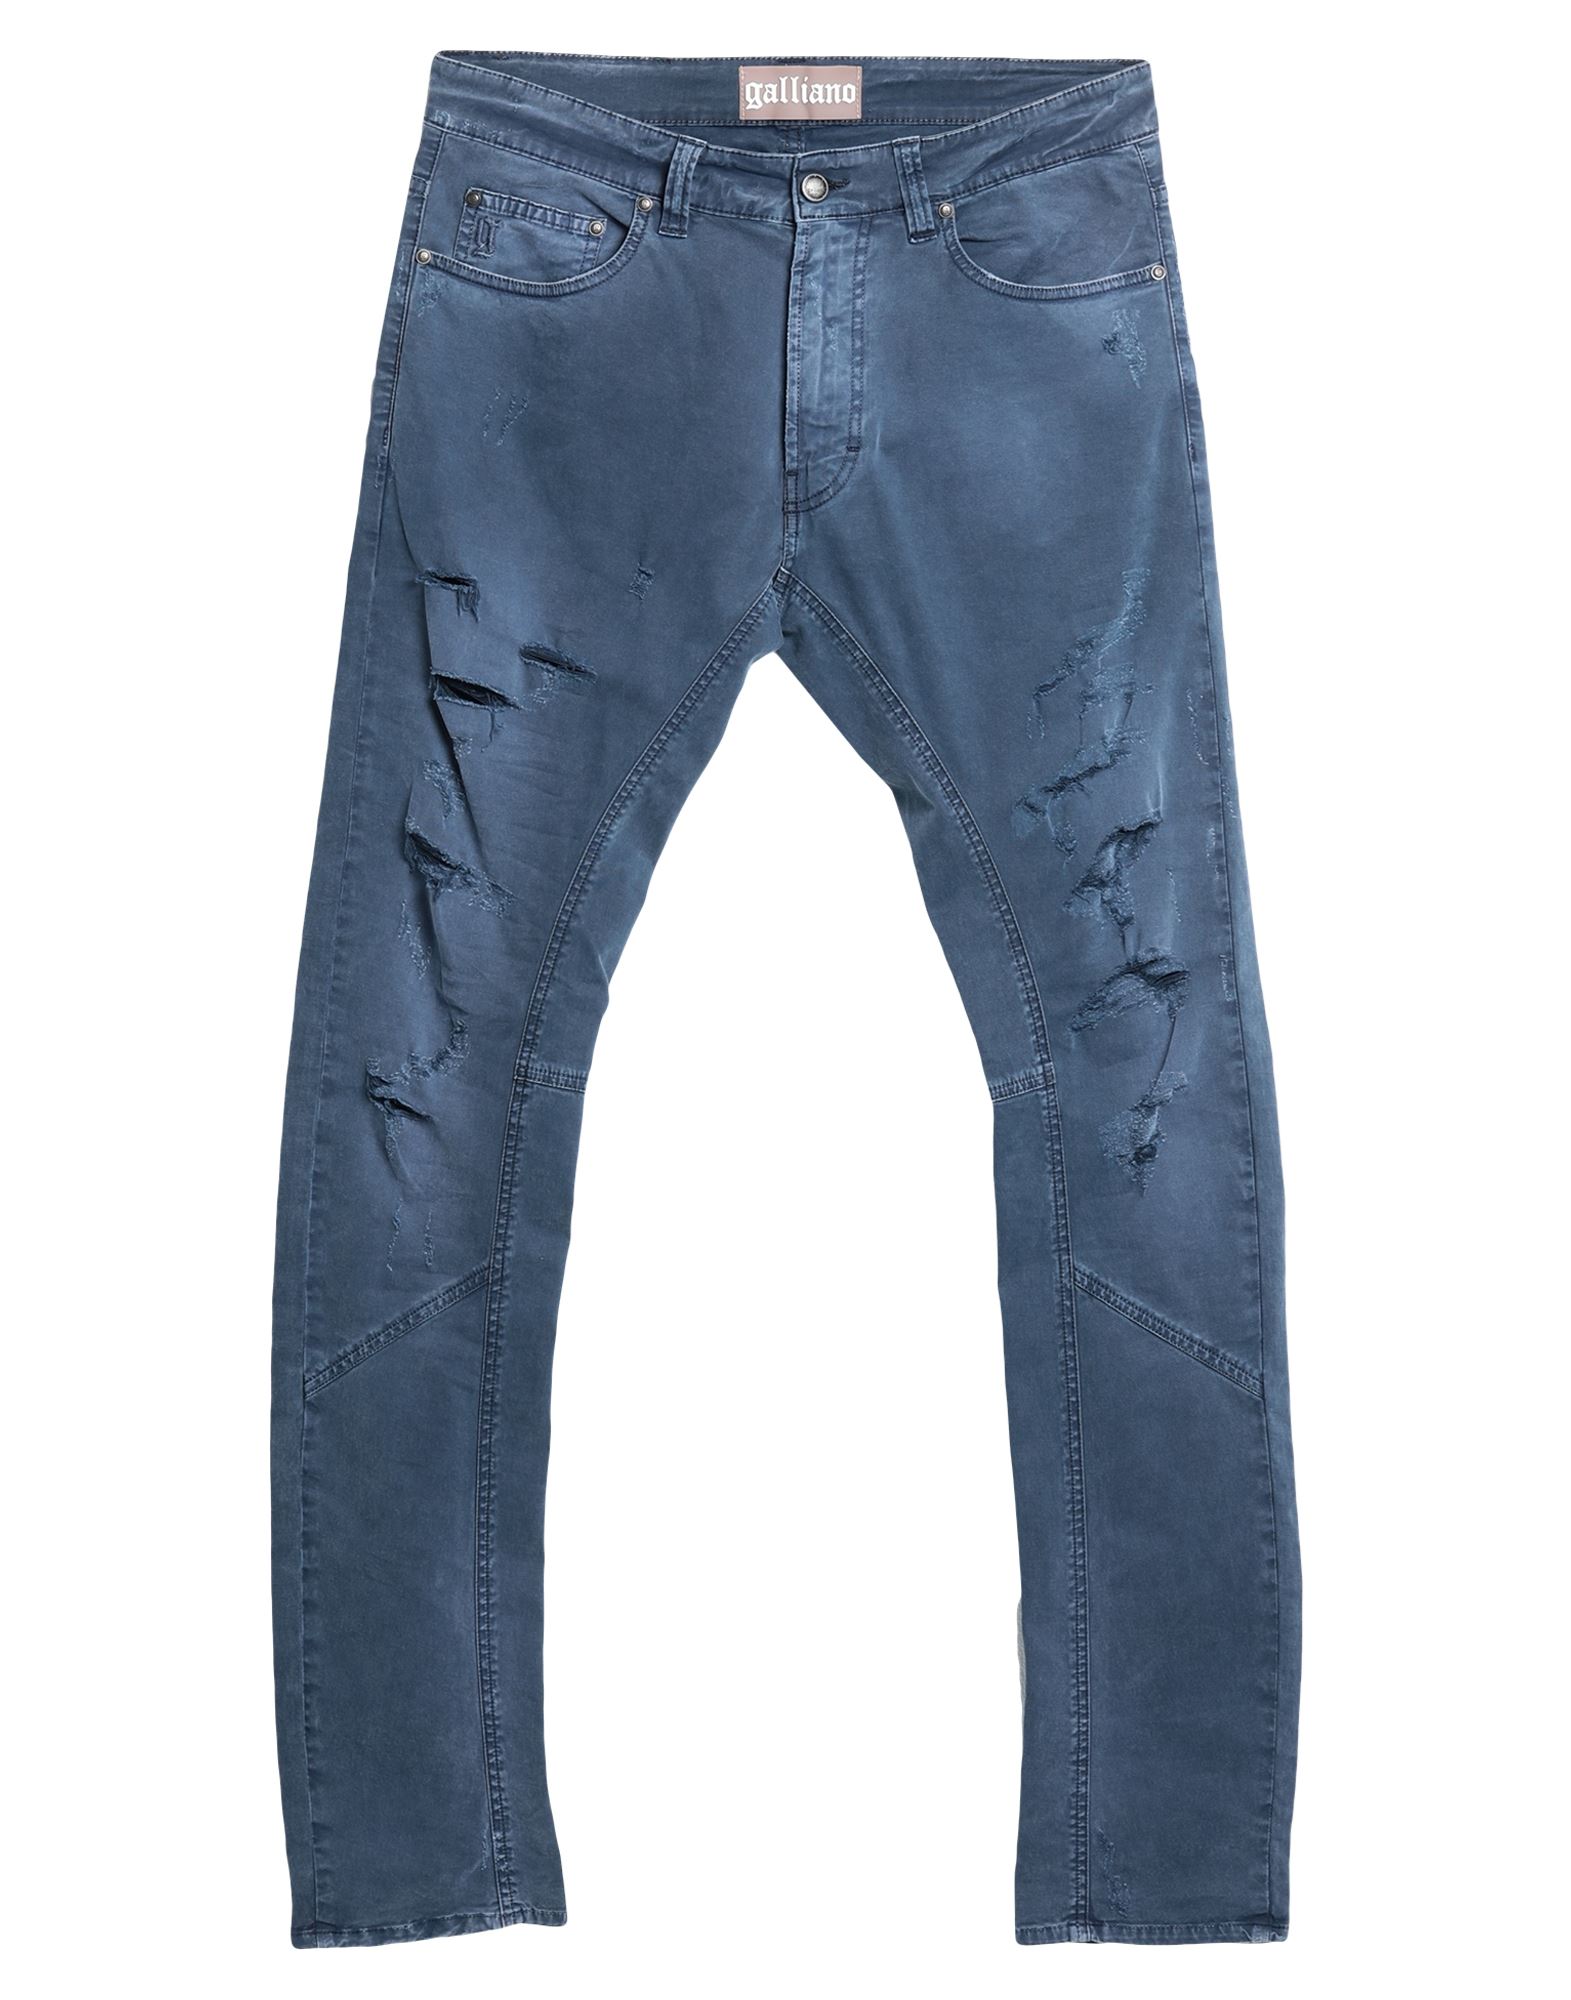 Galliano Pants In Slate Blue